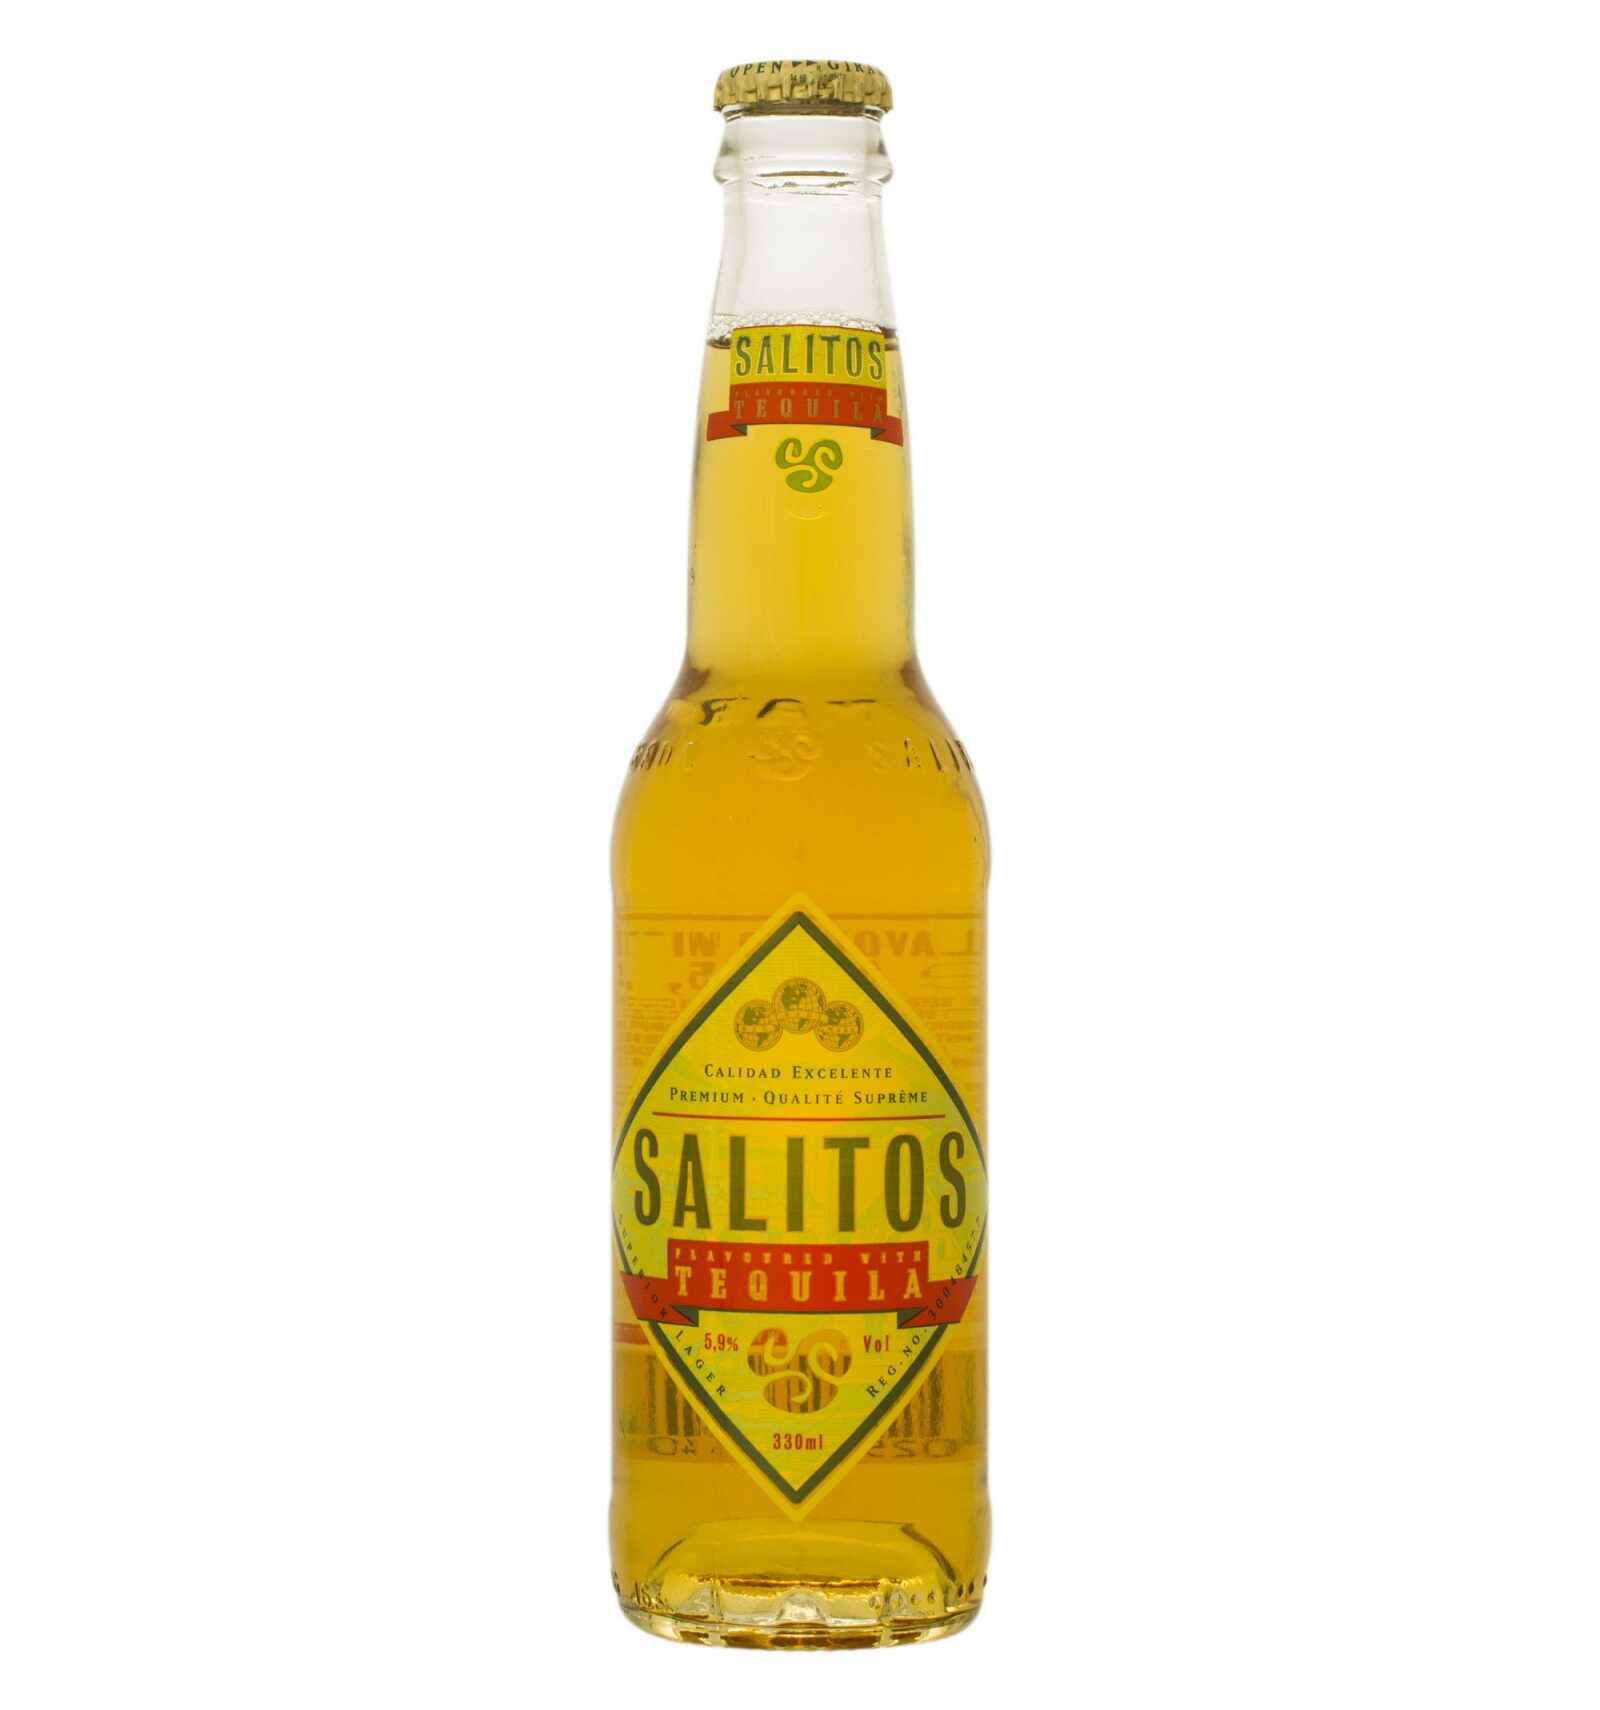 Bere blonda Tequila Salitos, 5.9% alc., 0.33L, Mexic